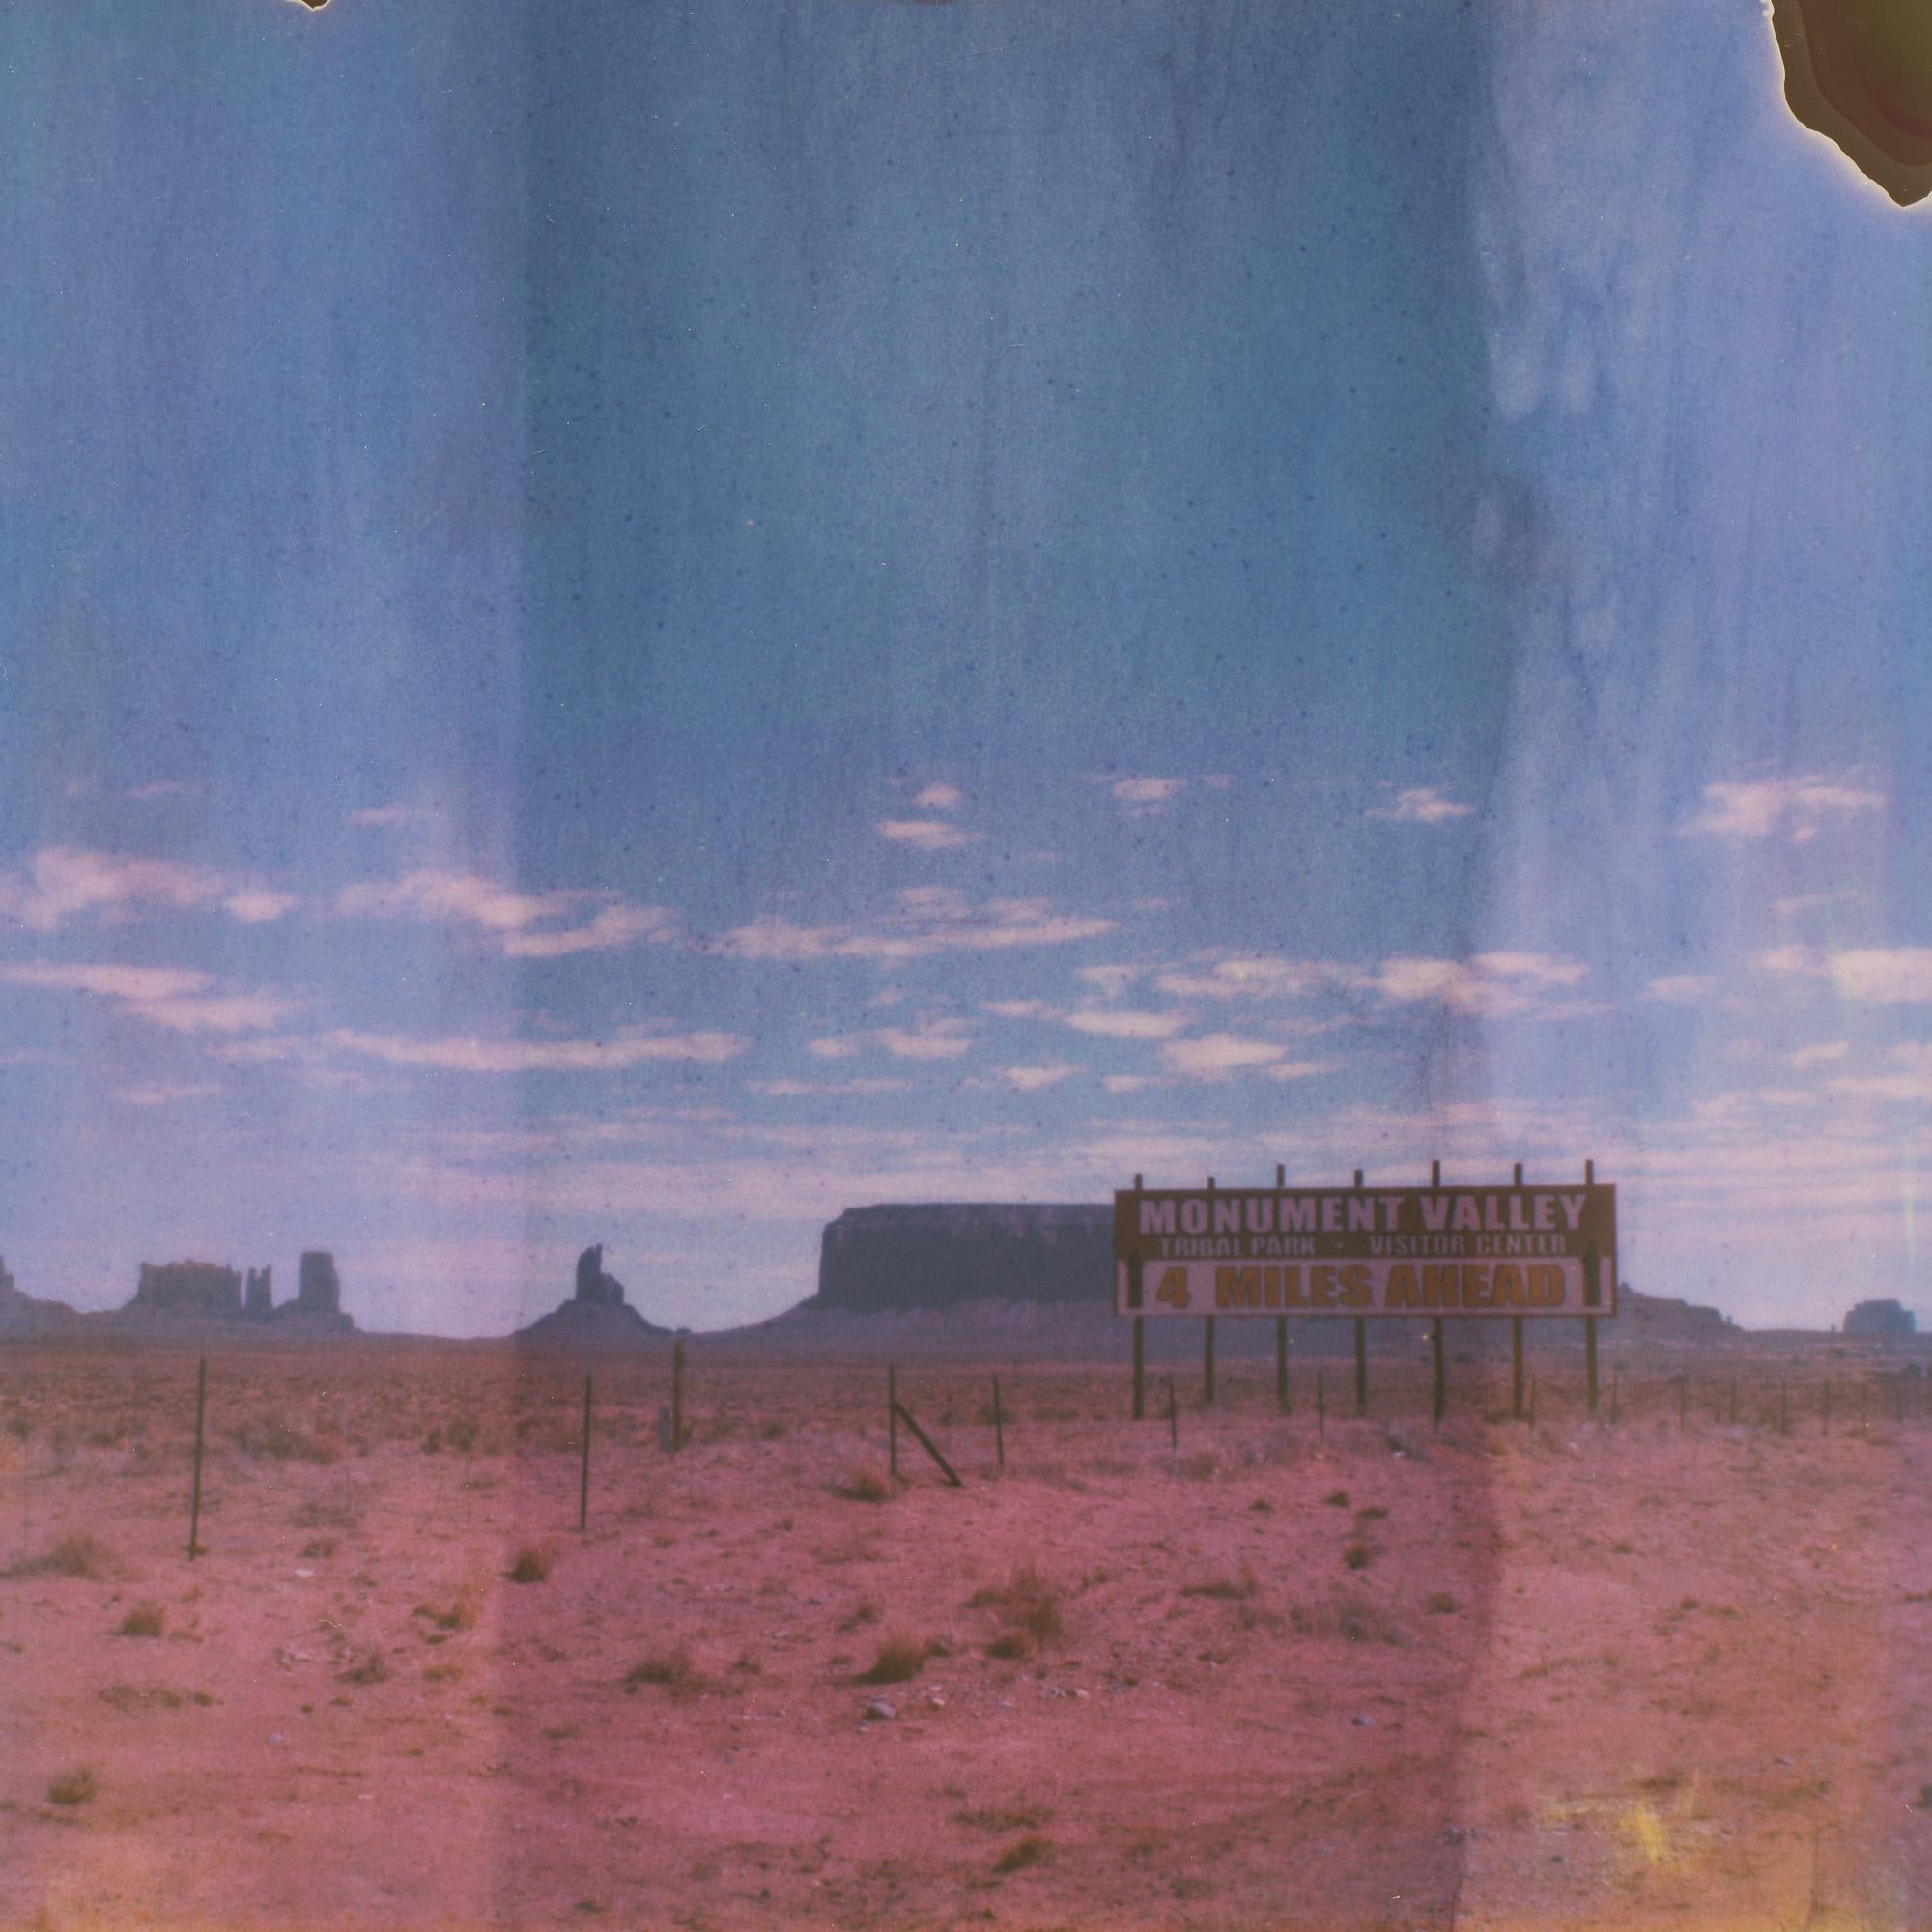 Promised Land, 21st Century, Polaroid, Landscape Photography, Color, Contemporar